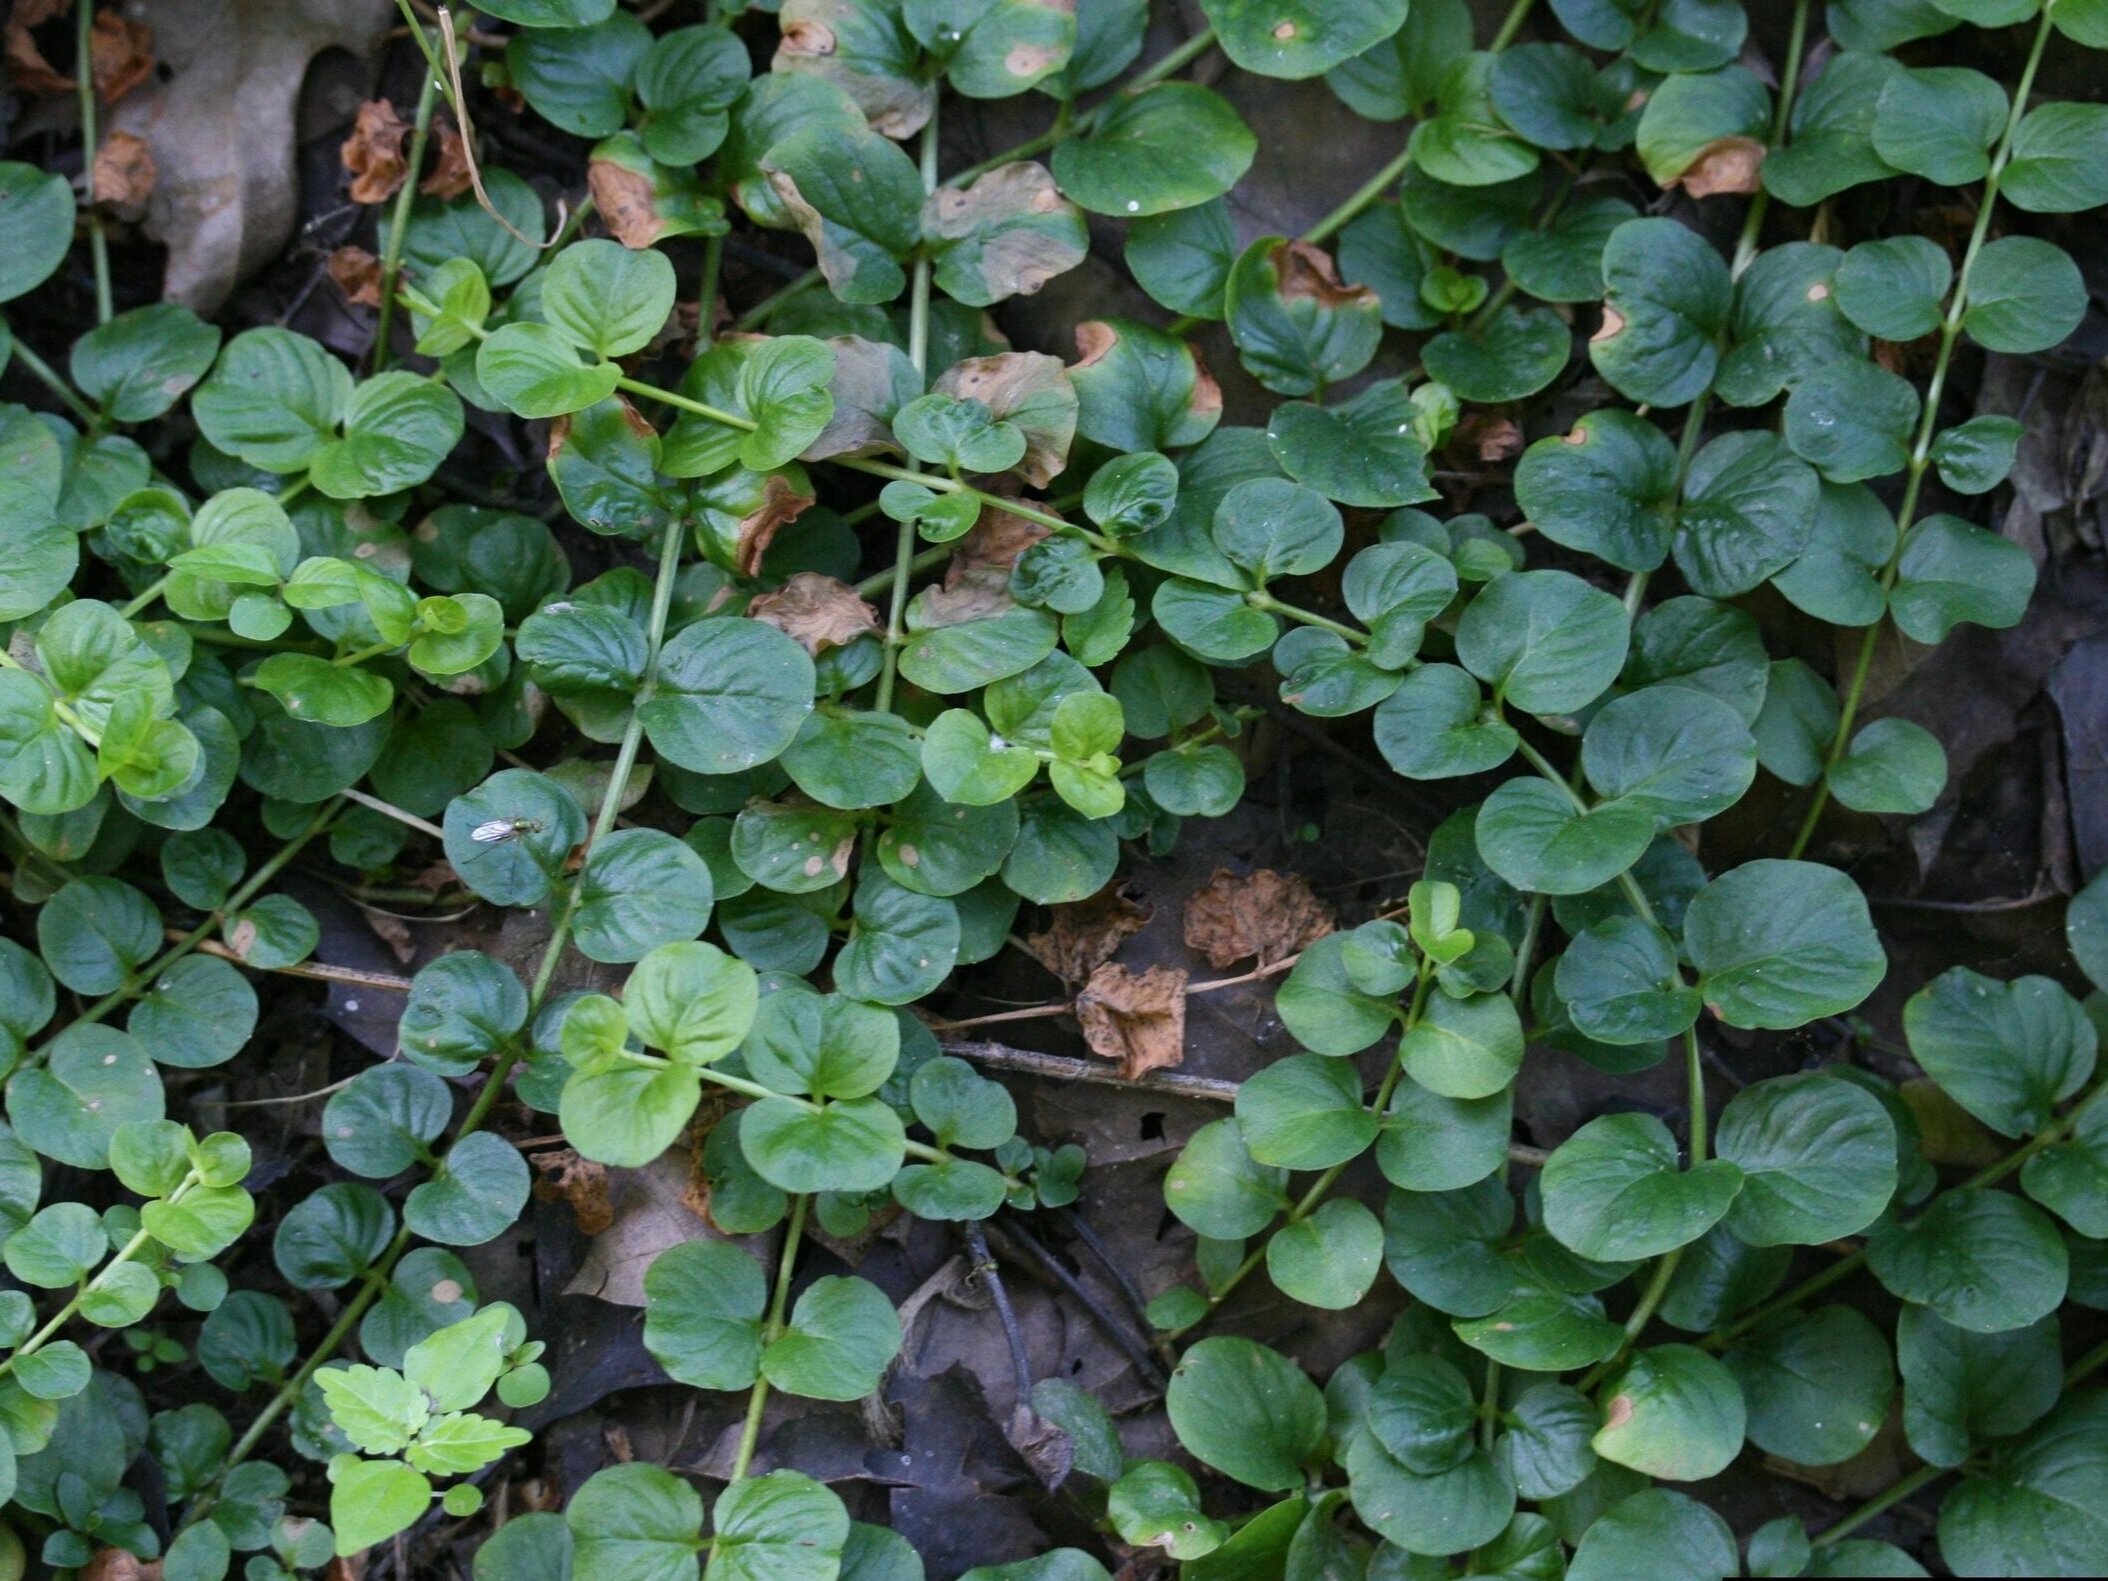 Moneywort foliage and stems